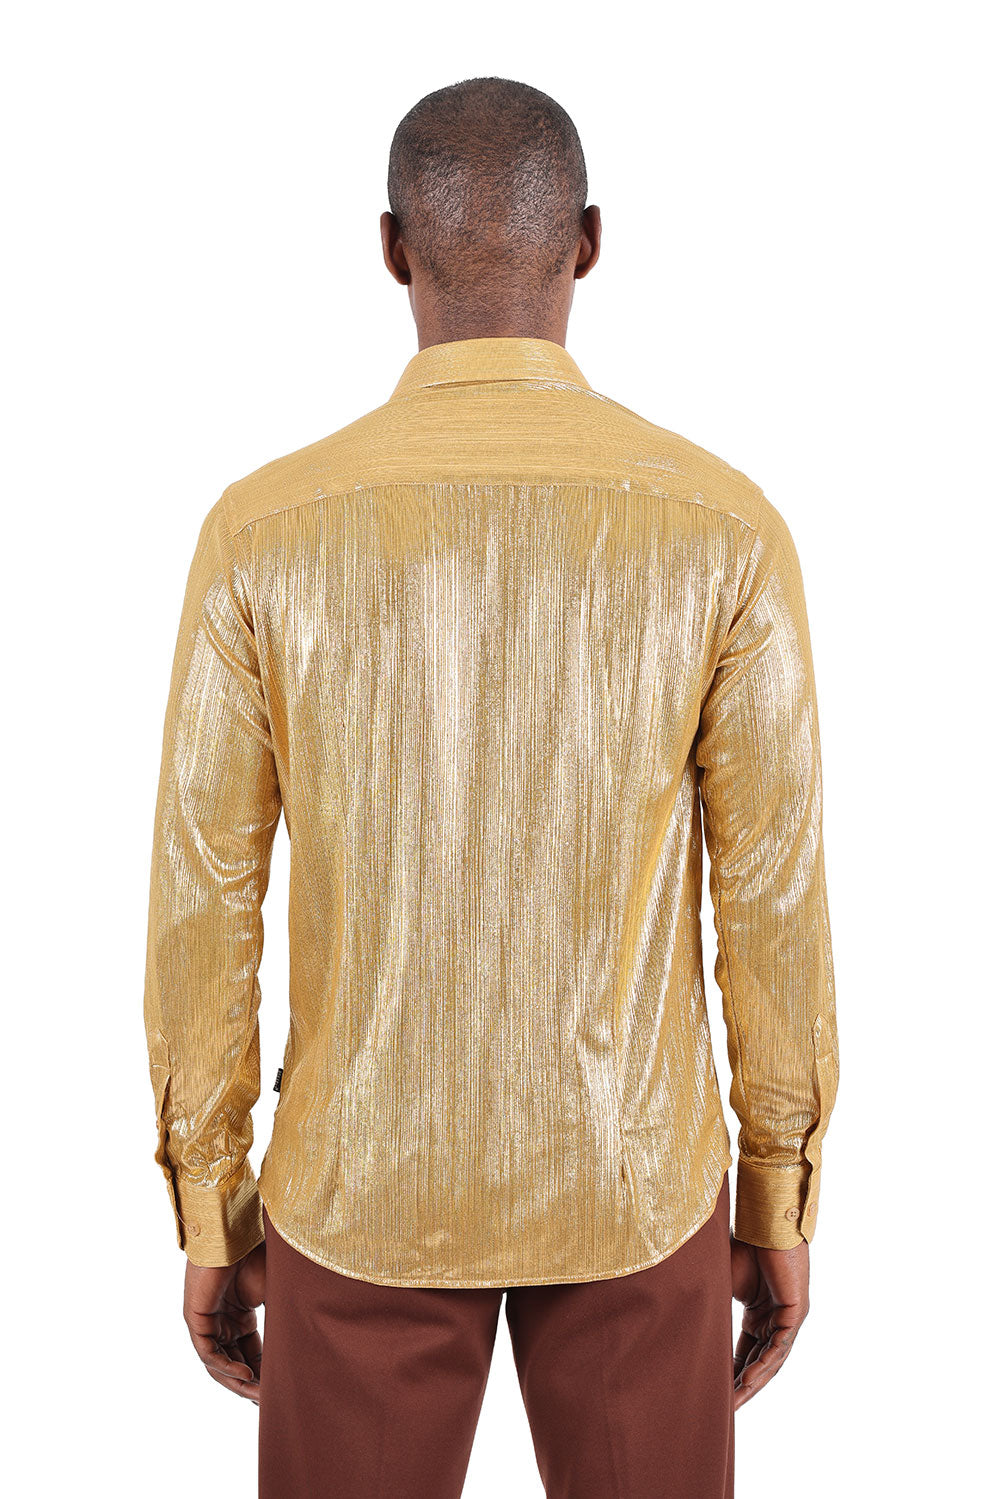 BARABAS Men's Premium Shinny Solid Color Button Down Dress Shirts B46 Gold